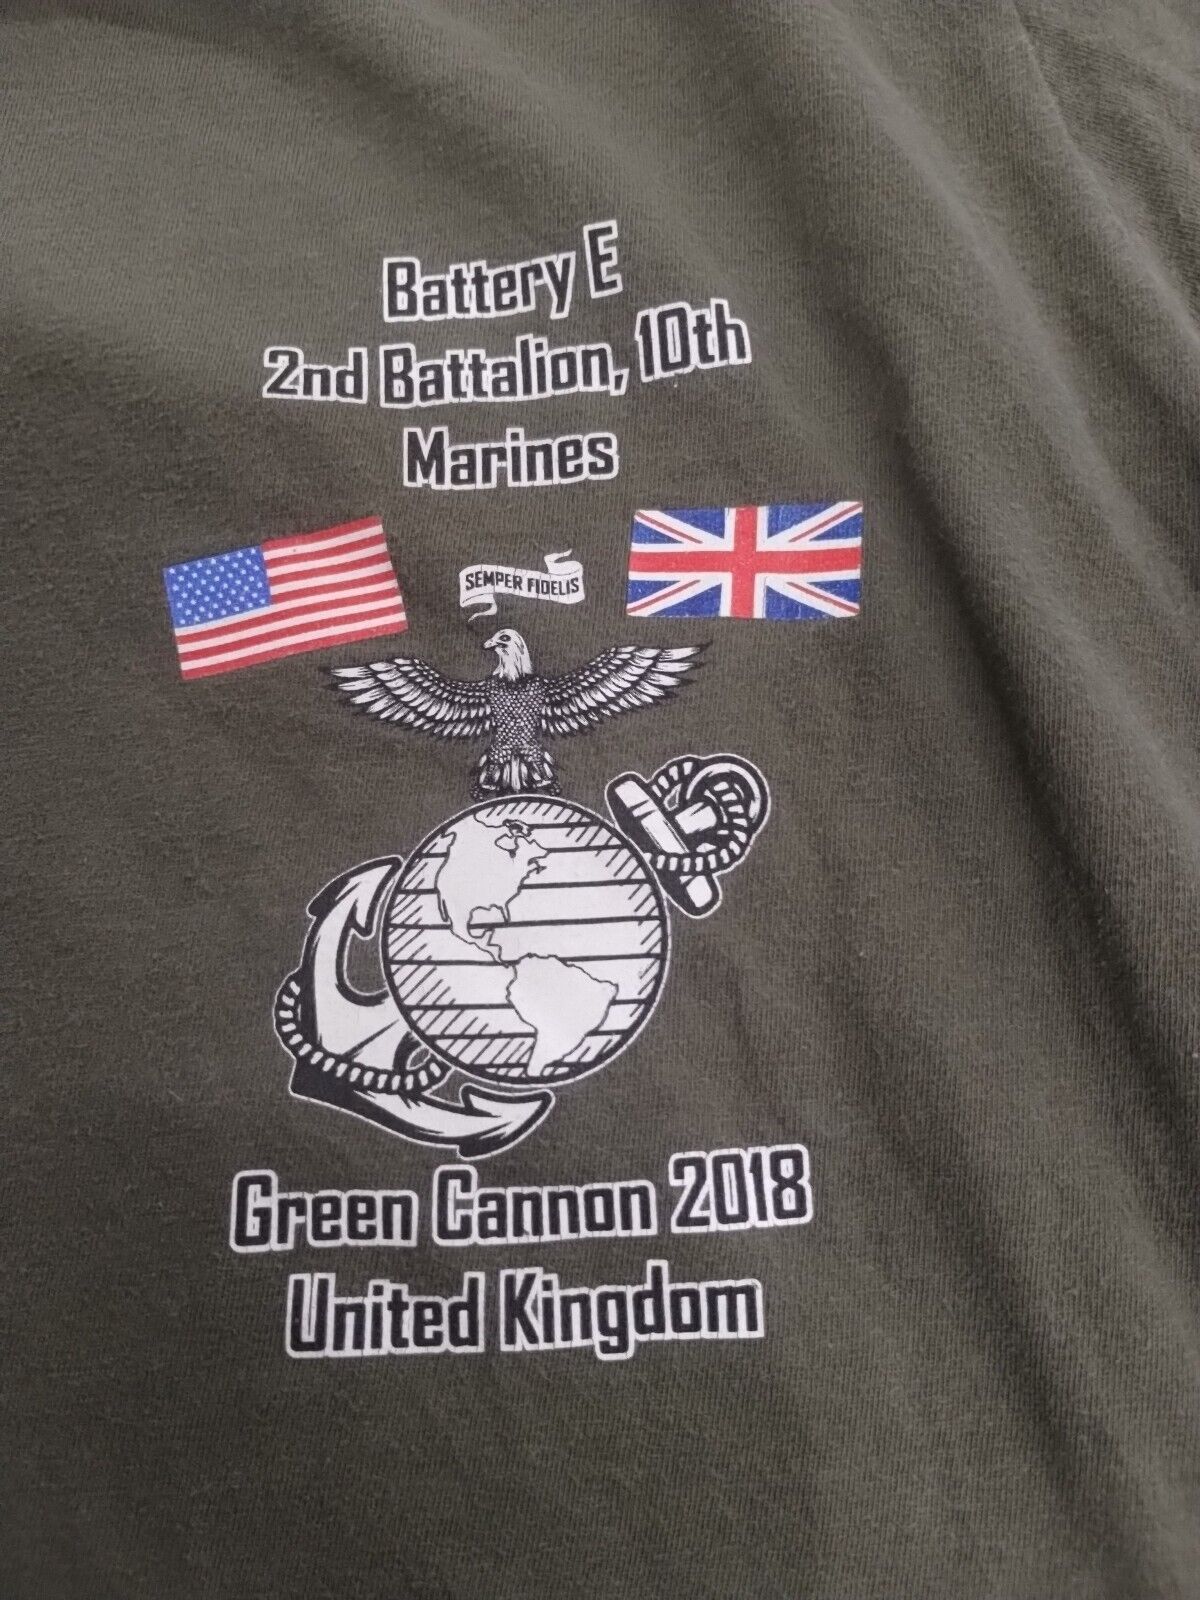 USMC Battery E 2nd Battalion 10th Marines Green Cannon UK Tshirt Green Sz M